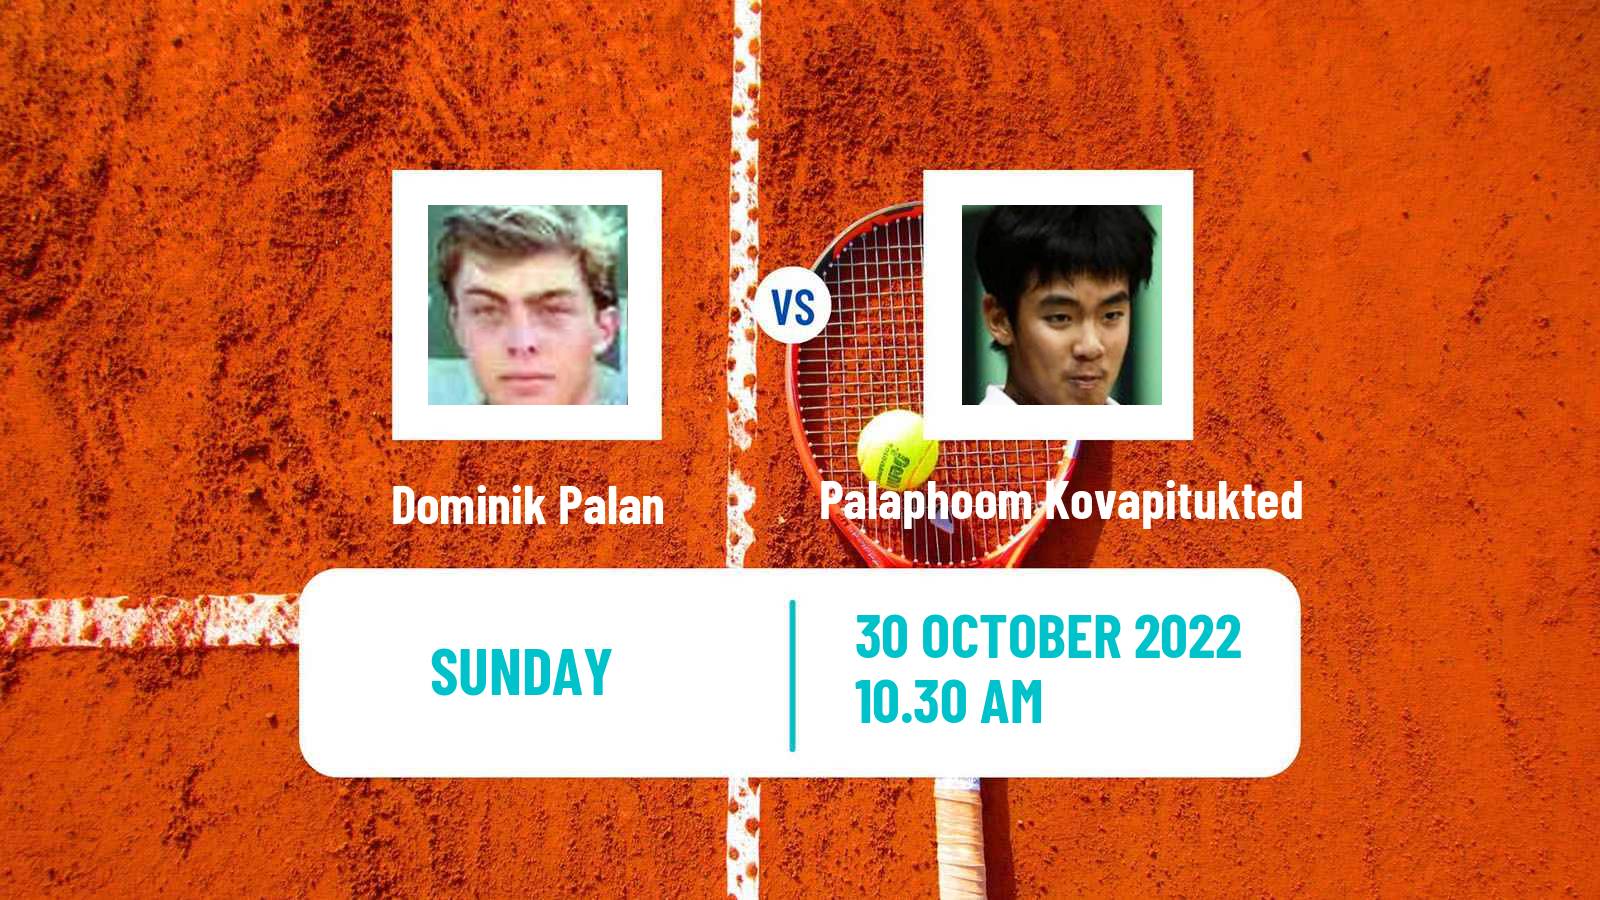 Tennis ITF Tournaments Dominik Palan - Palaphoom Kovapitukted